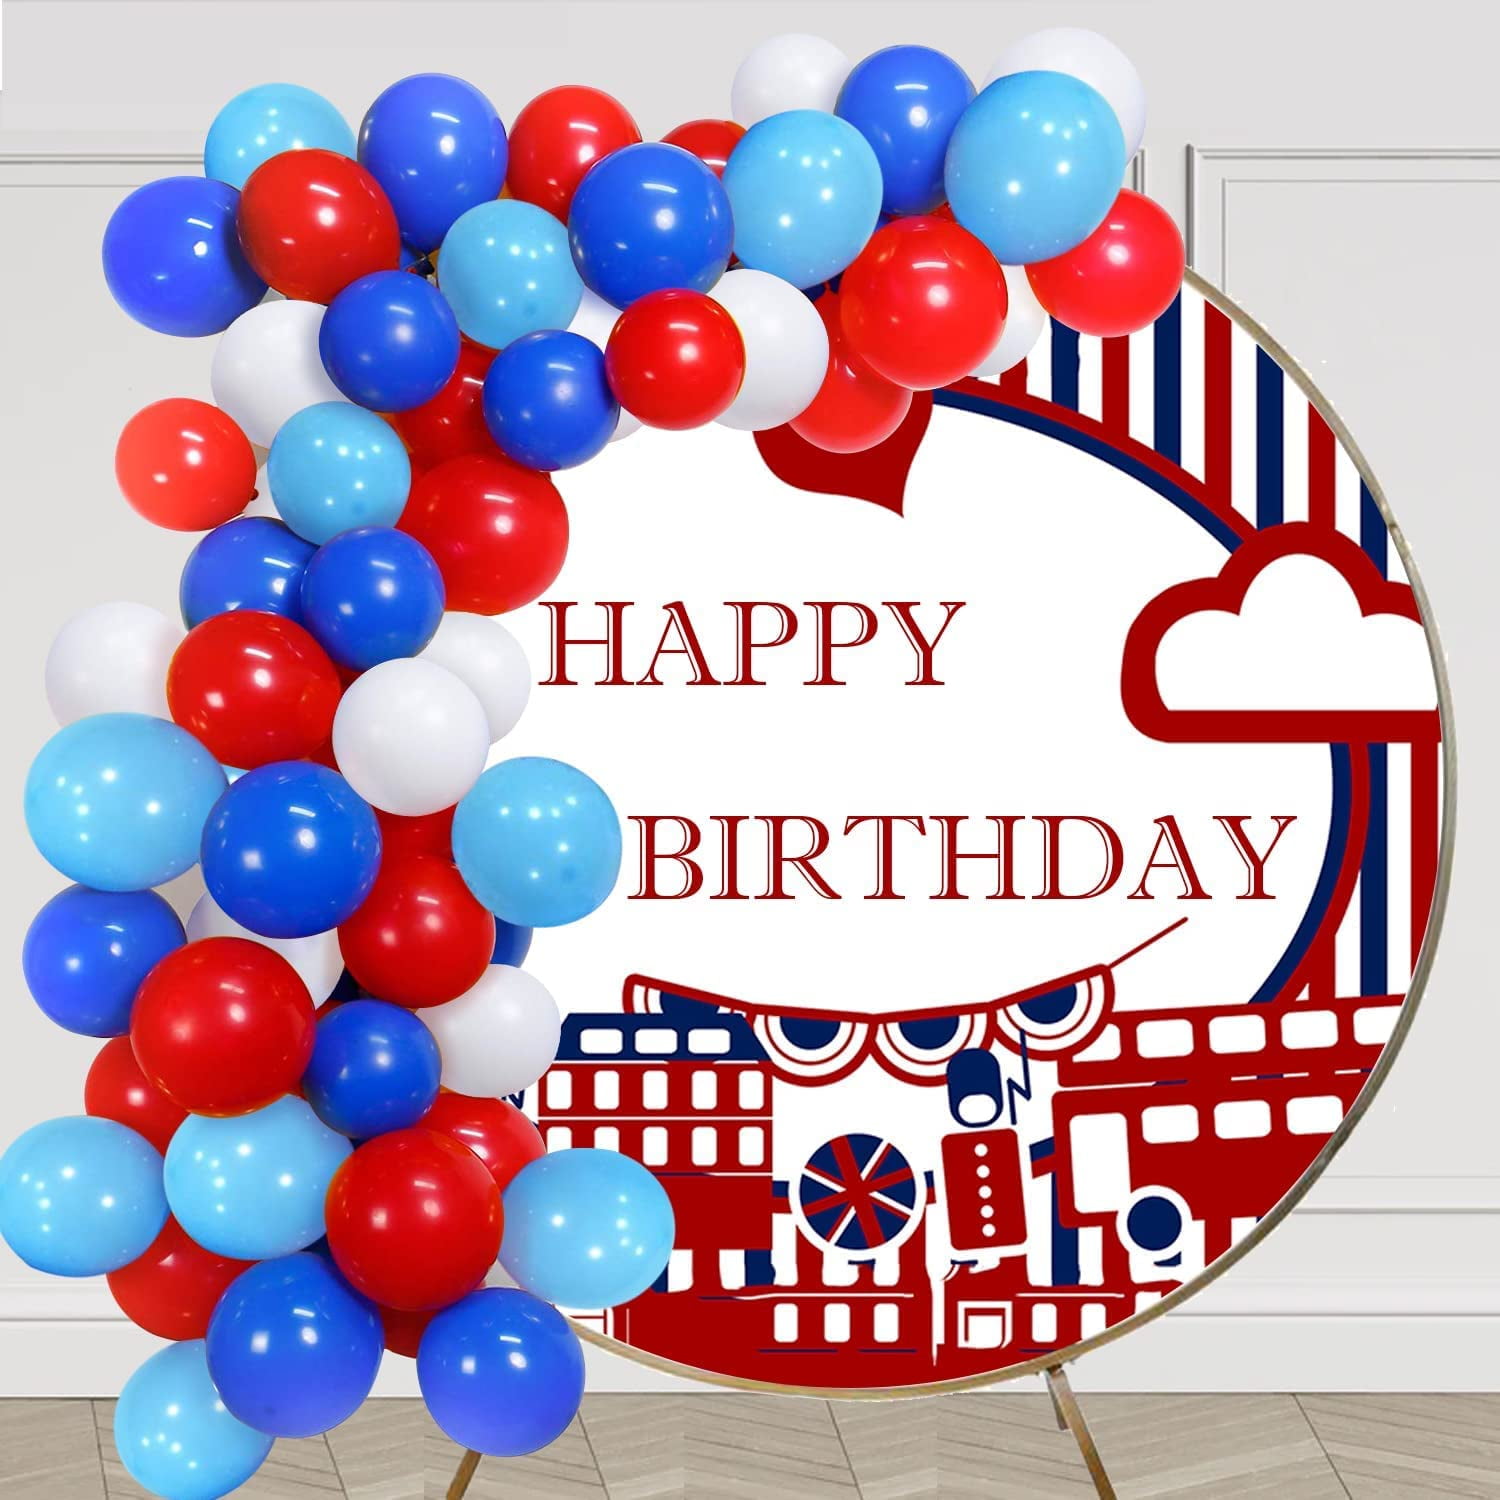 AYUQI Balloon Arch & Garland Kit, 100 Balloons, Red, White, Blue